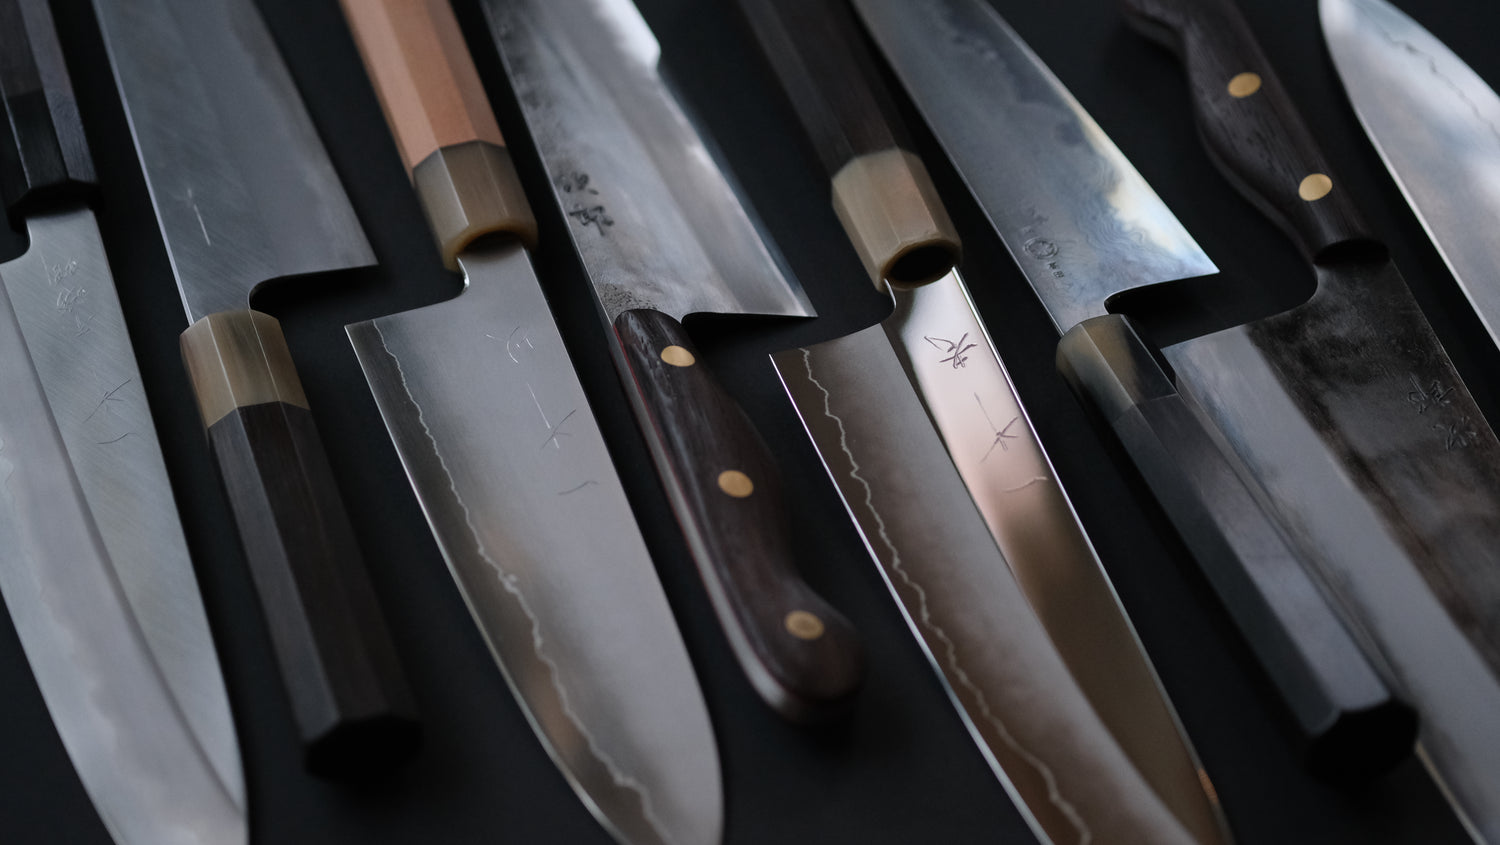 Christmas drop – Karasu Japanese knives